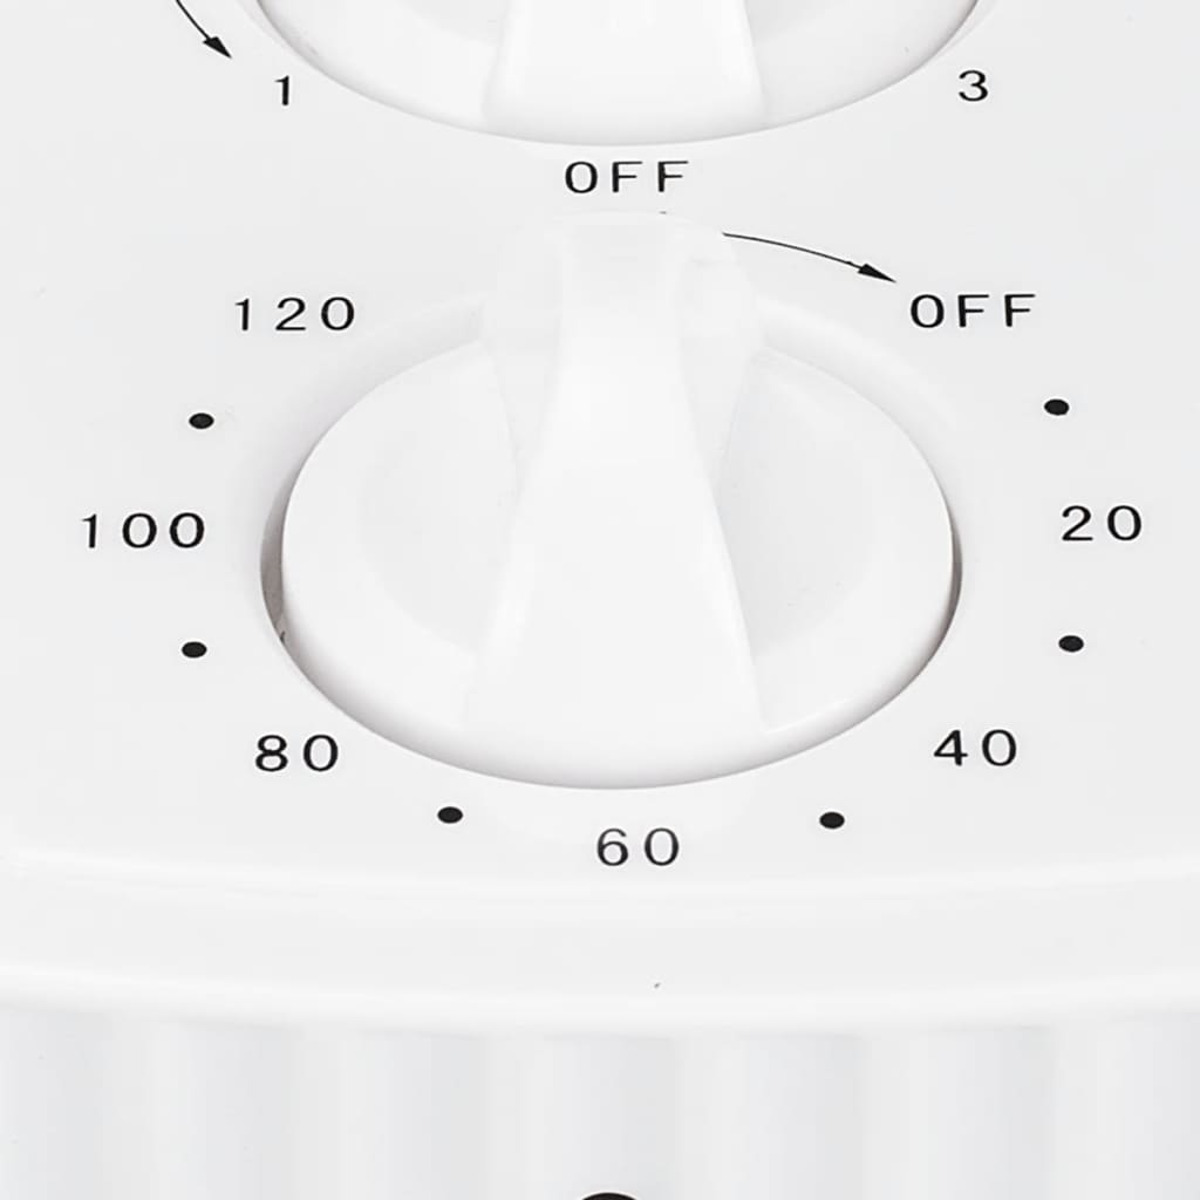 Ventilator Weiß Watt) (35 410549 TRISTAR